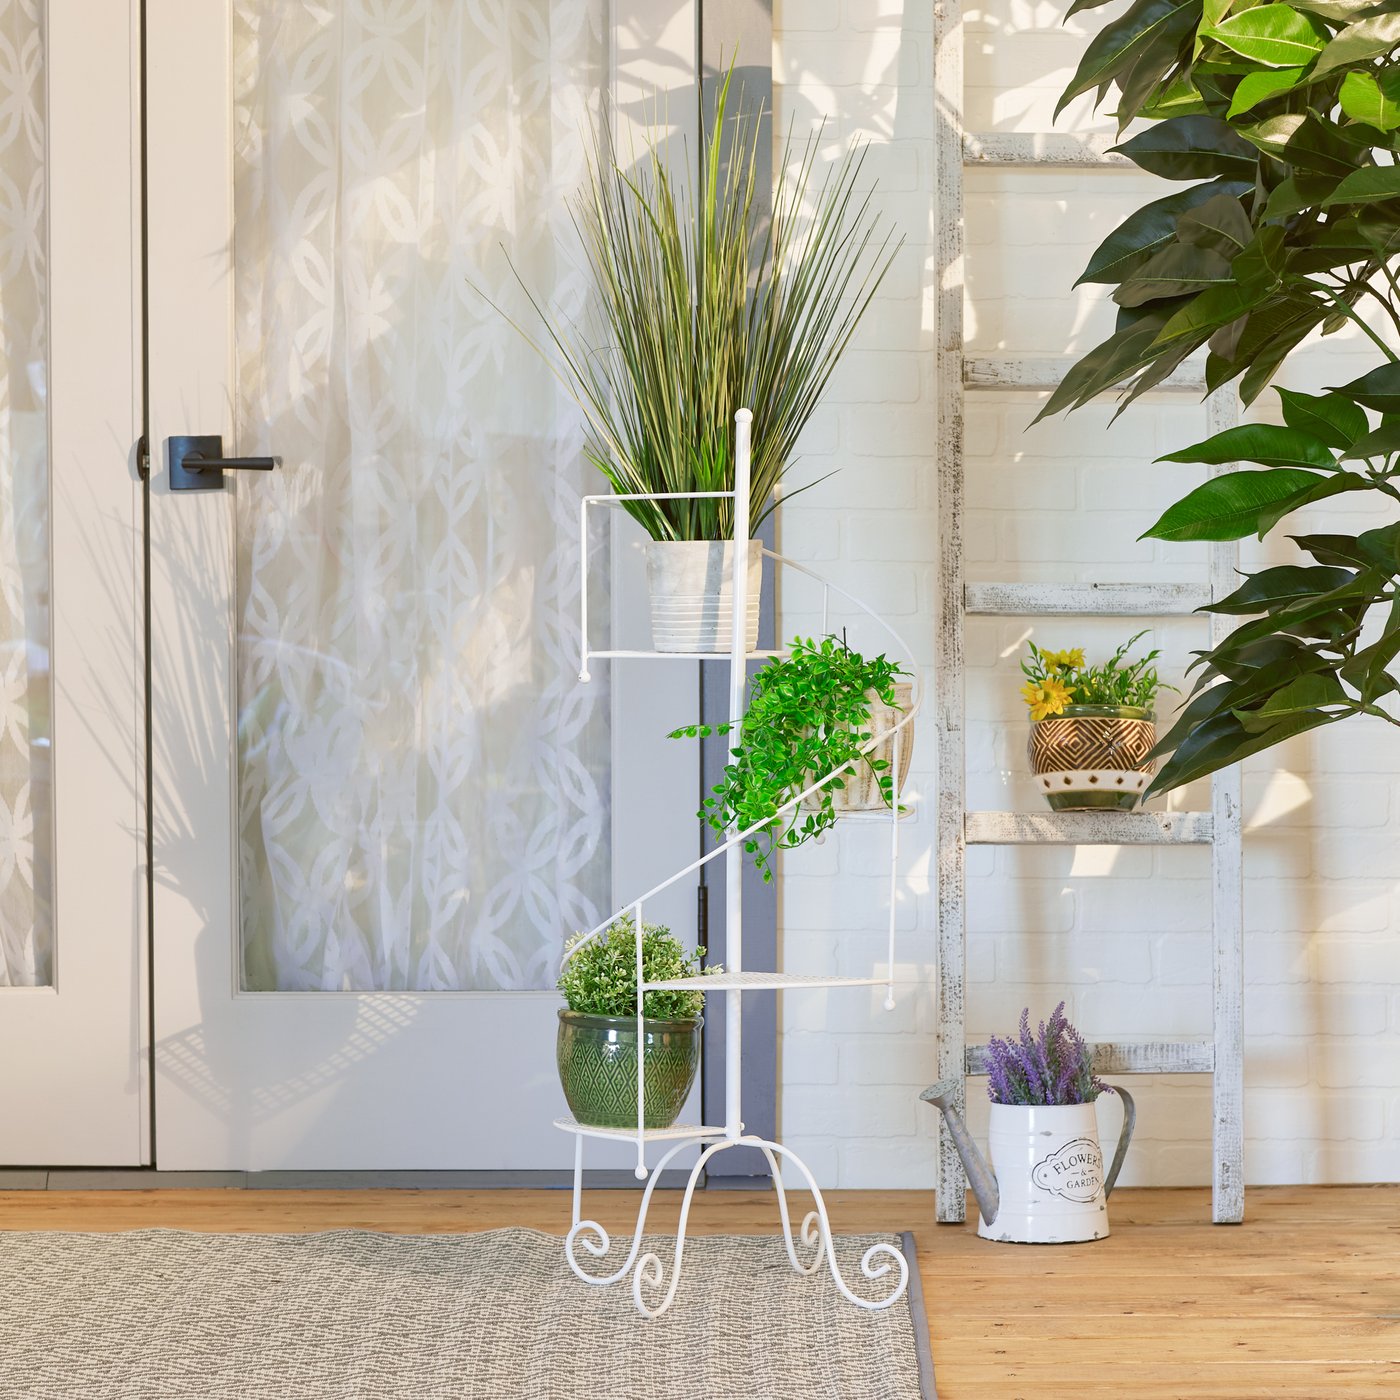 Iron White Spiral Showcase Plant Stand Indoor or Outdoor Garden Home Decor